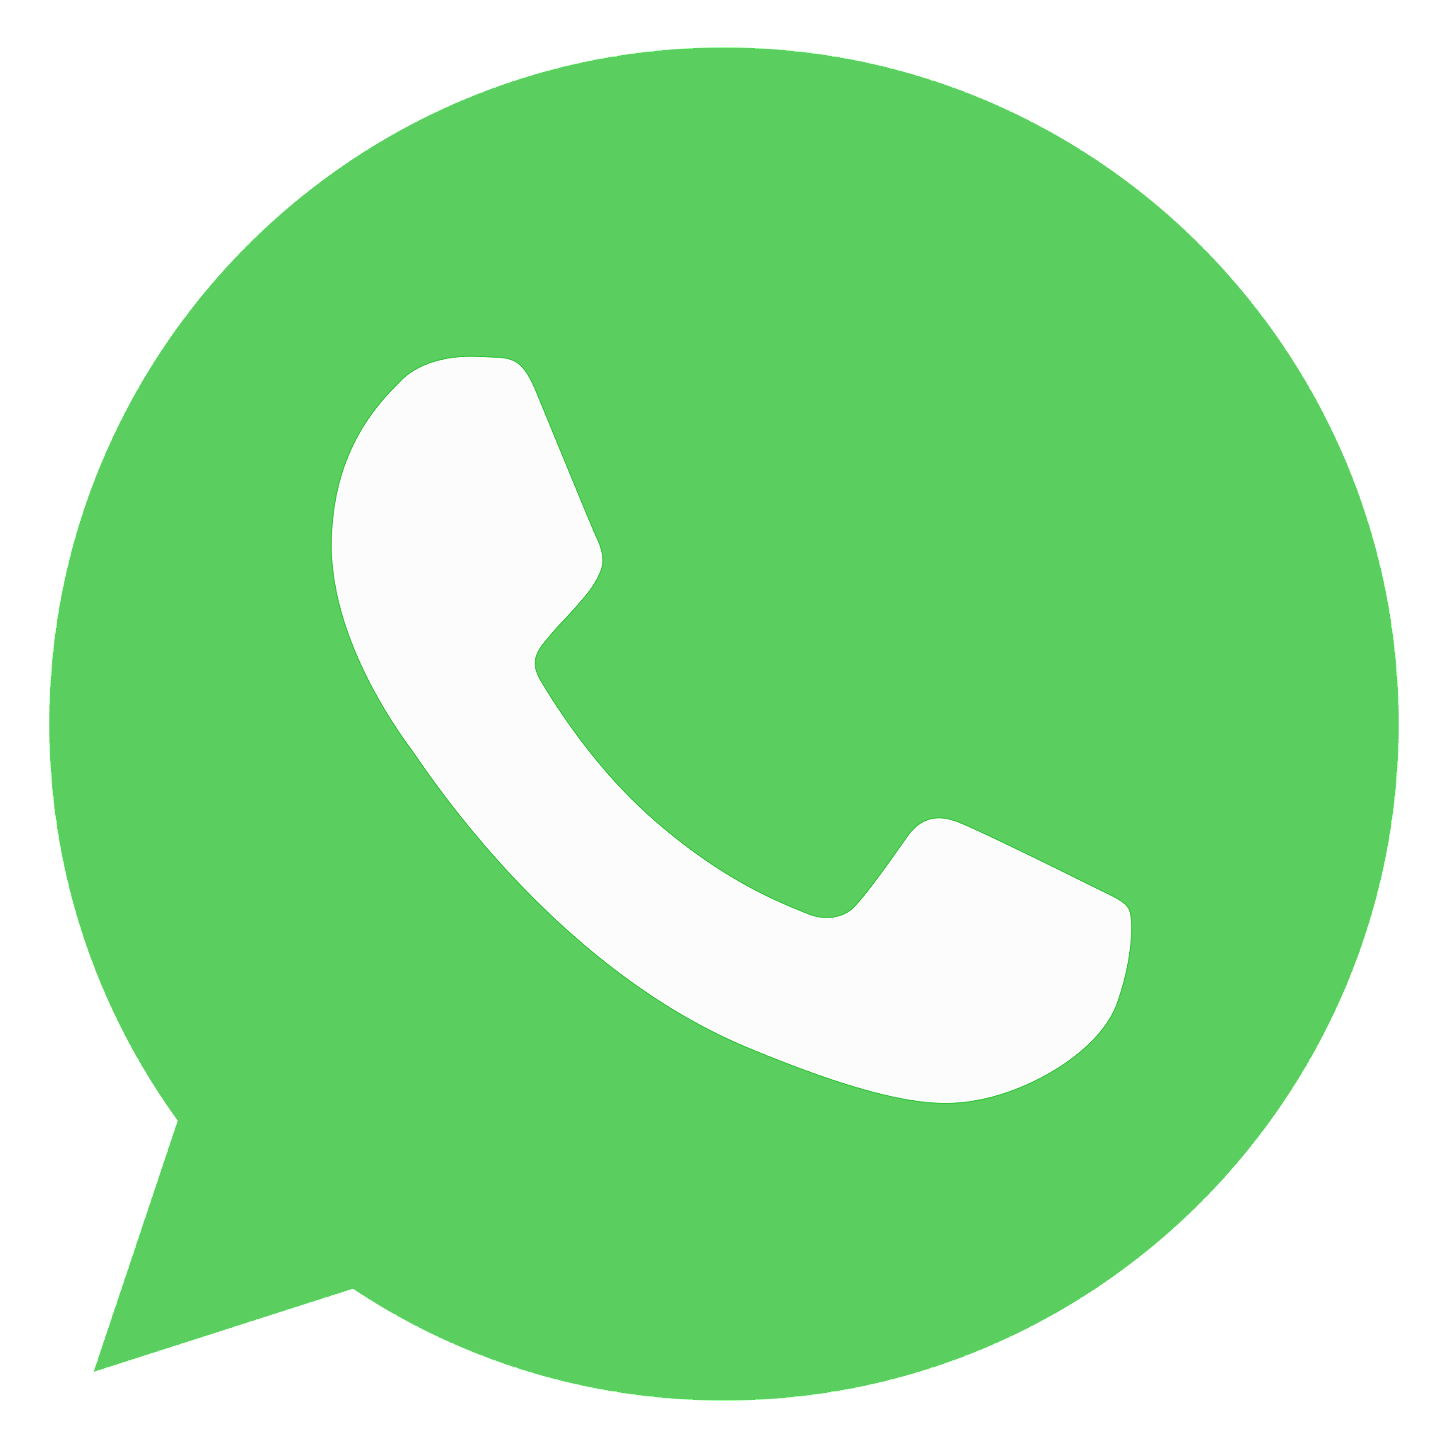 Fale Conosco pelo Whatsapp